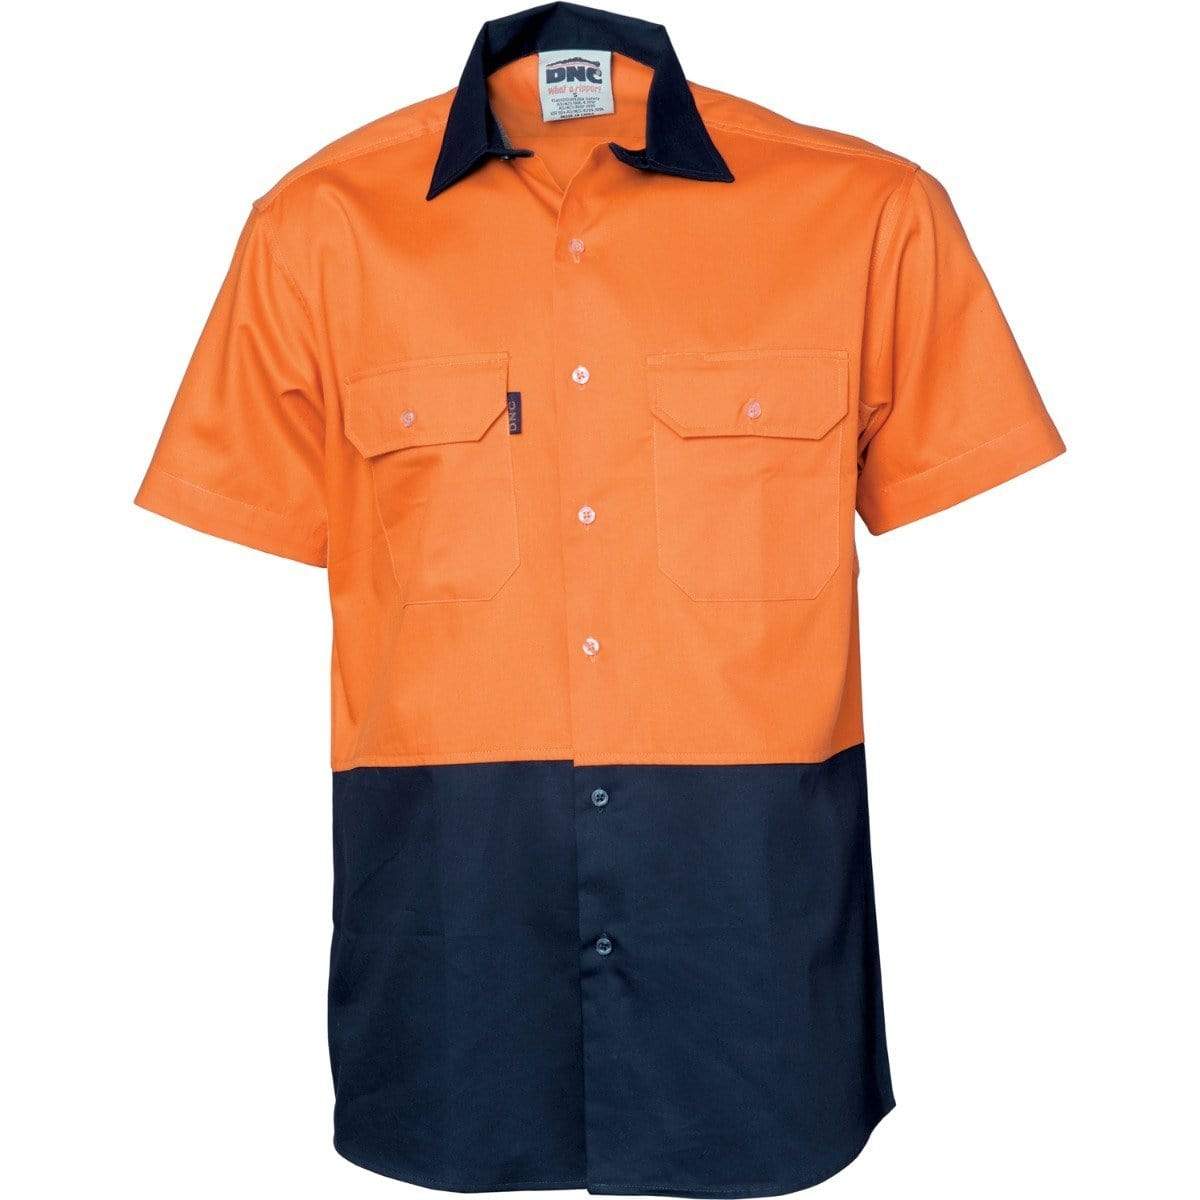 Dnc Workwear Hi-vis 2 Tone Cool-breeze Short Sleeve Cotton Shirt - 3839 Work Wear DNC Workwear Orange/Navy XS 